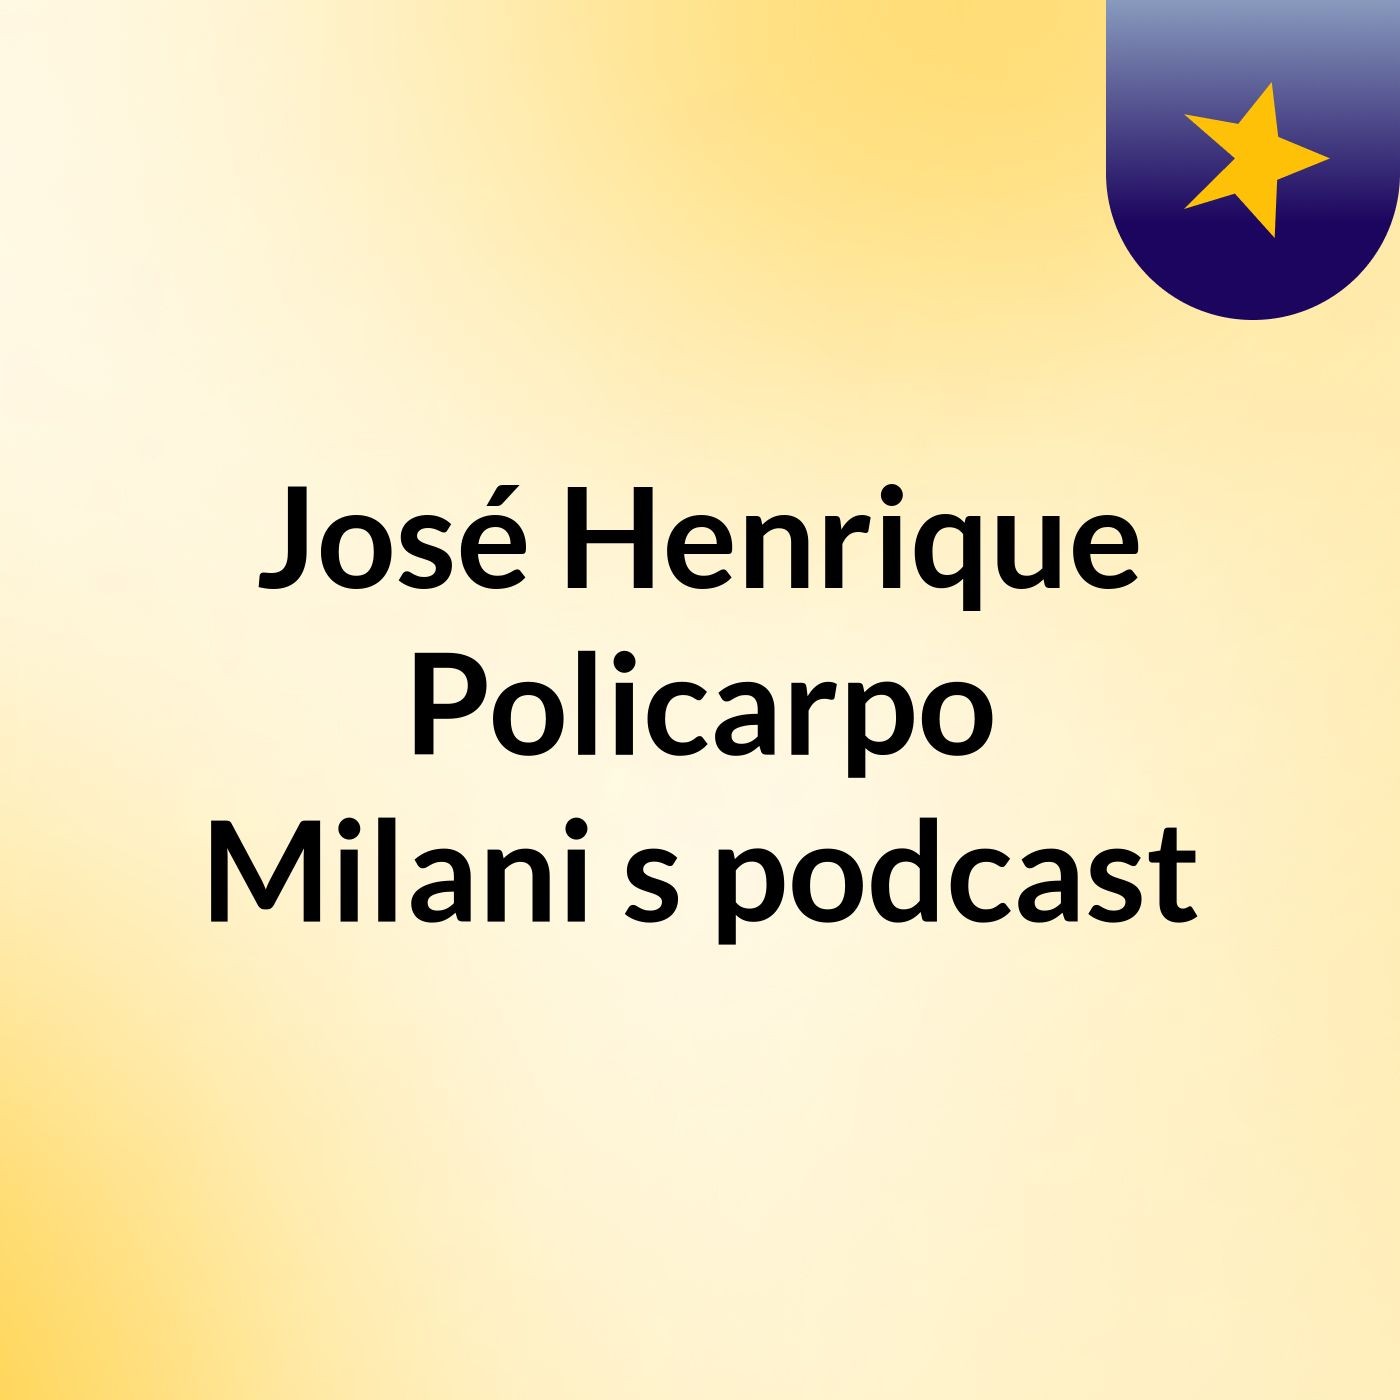 José Henrique Policarpo Milani's podcast